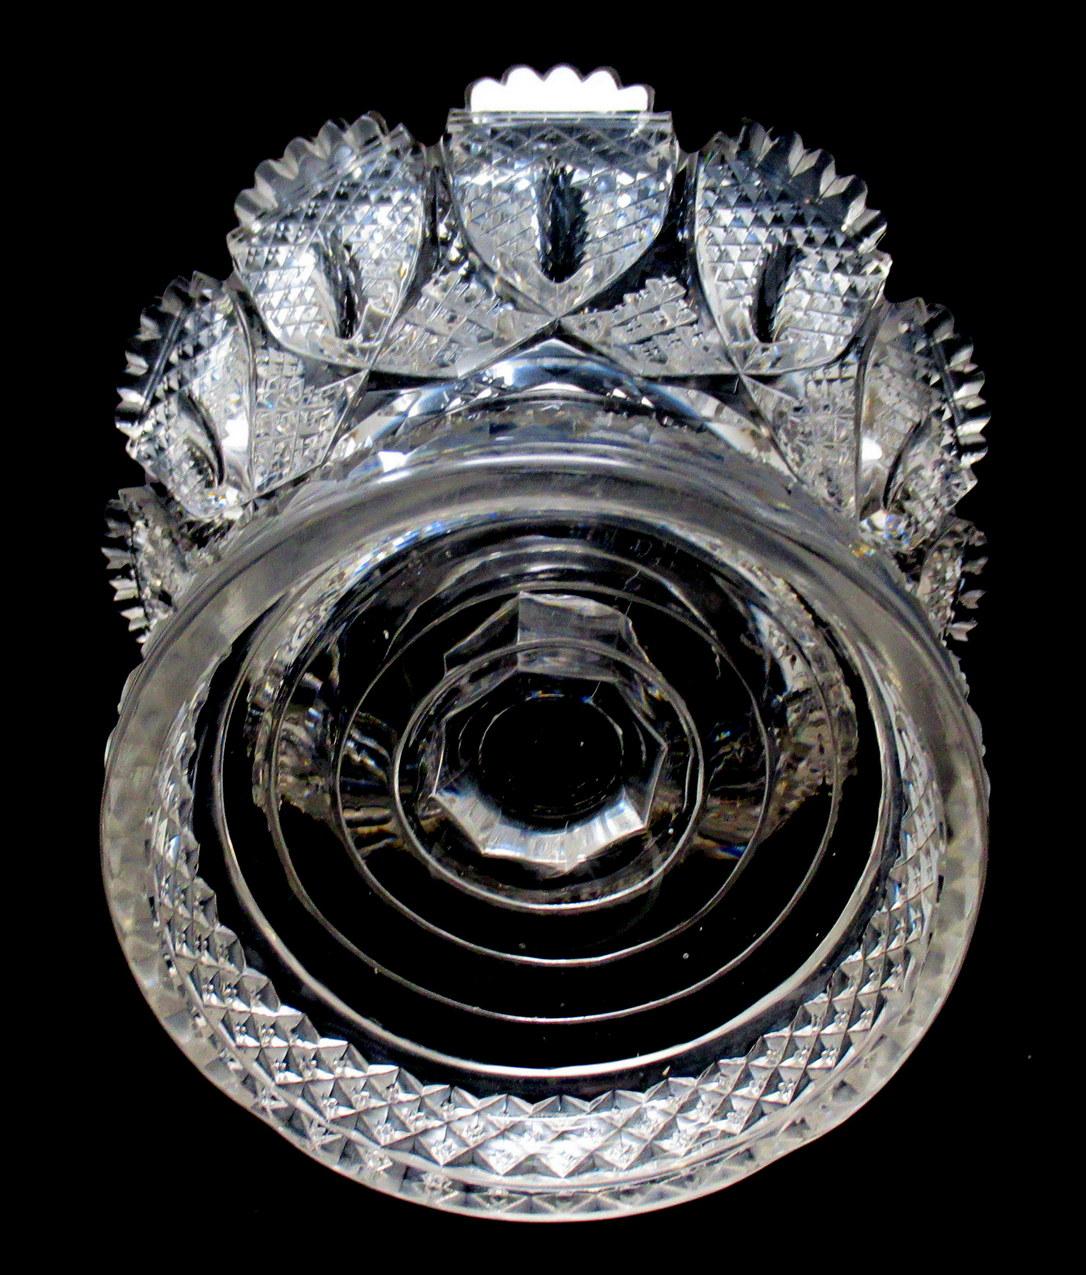 Antique English Stuart Crystal Hand Cut Glass Bowl Victorian Centerpiece Bowl 1